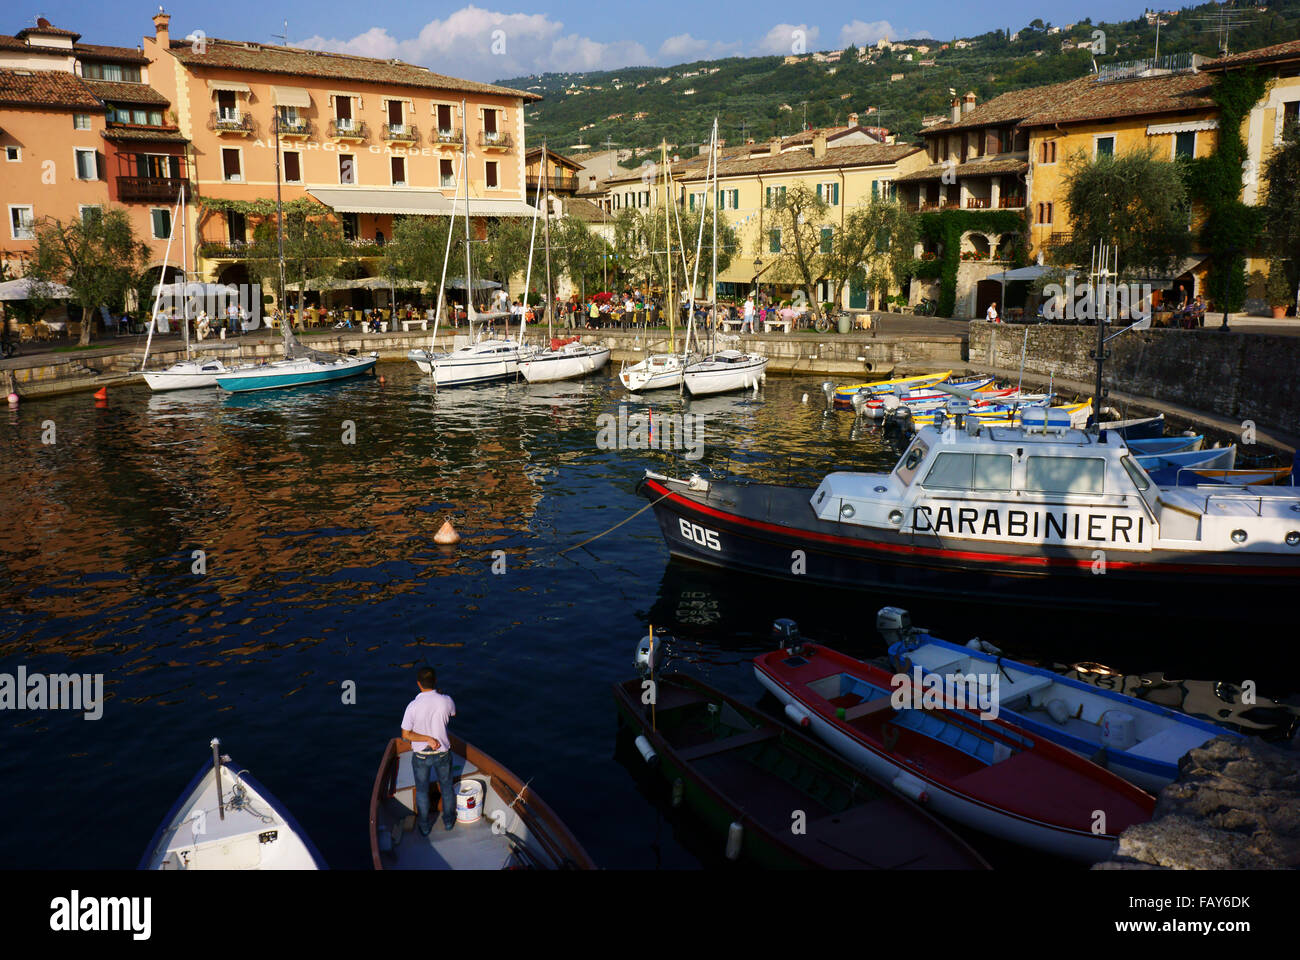 Harbor and old town Malcesine, Lake Grada, Province Verona, Italy Stock Photo